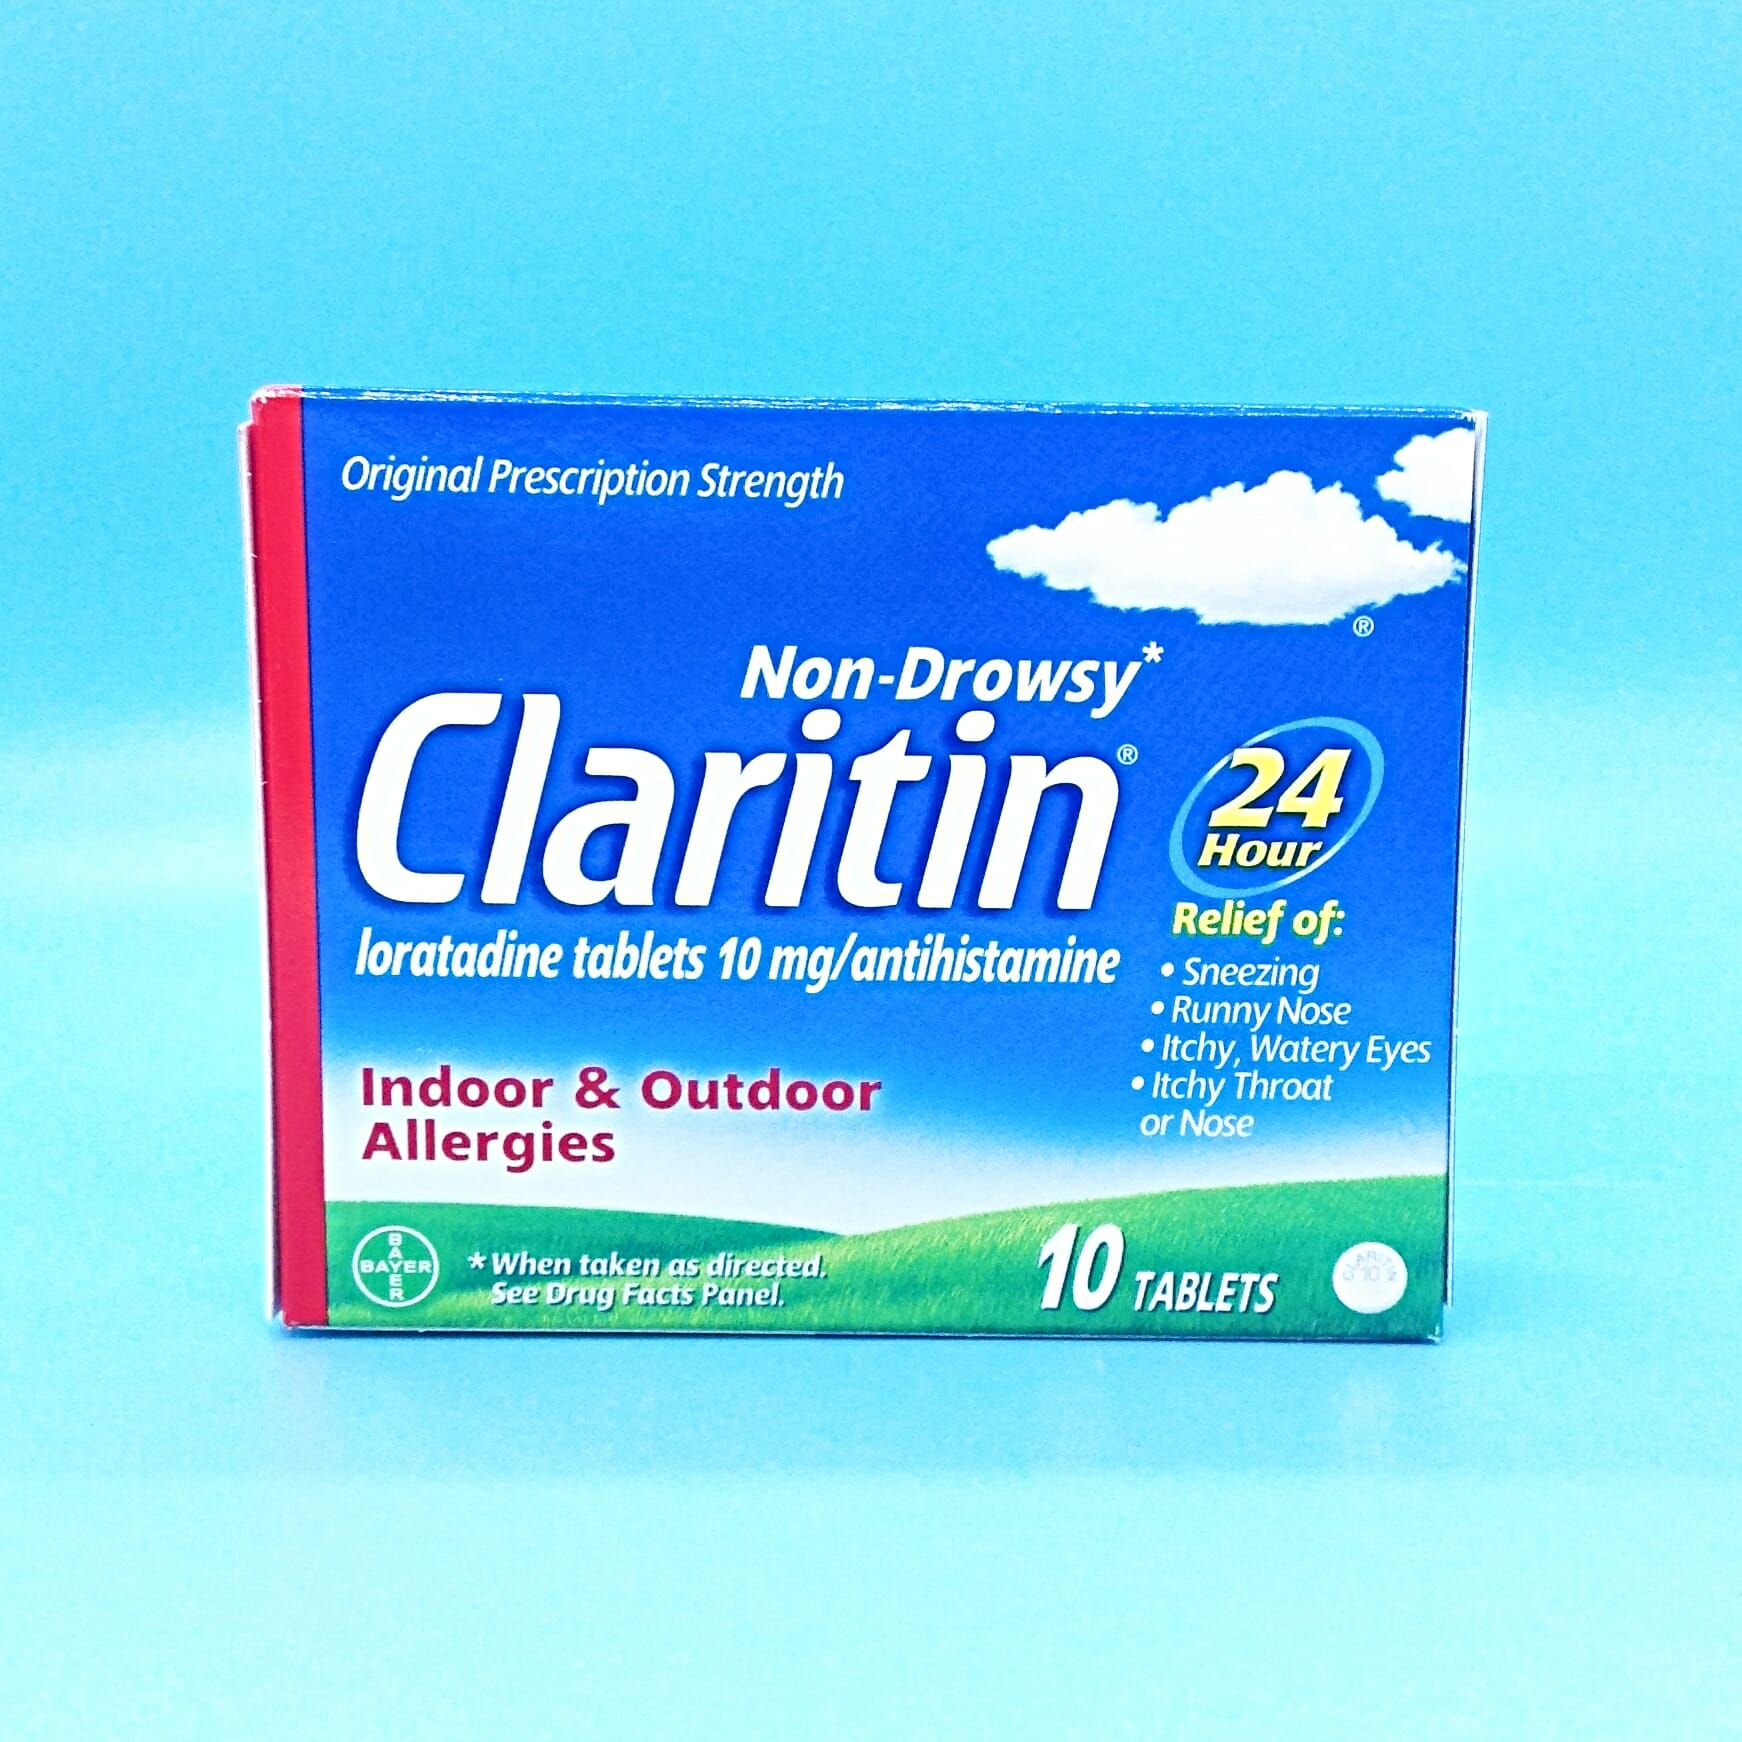 claritin uses dosage